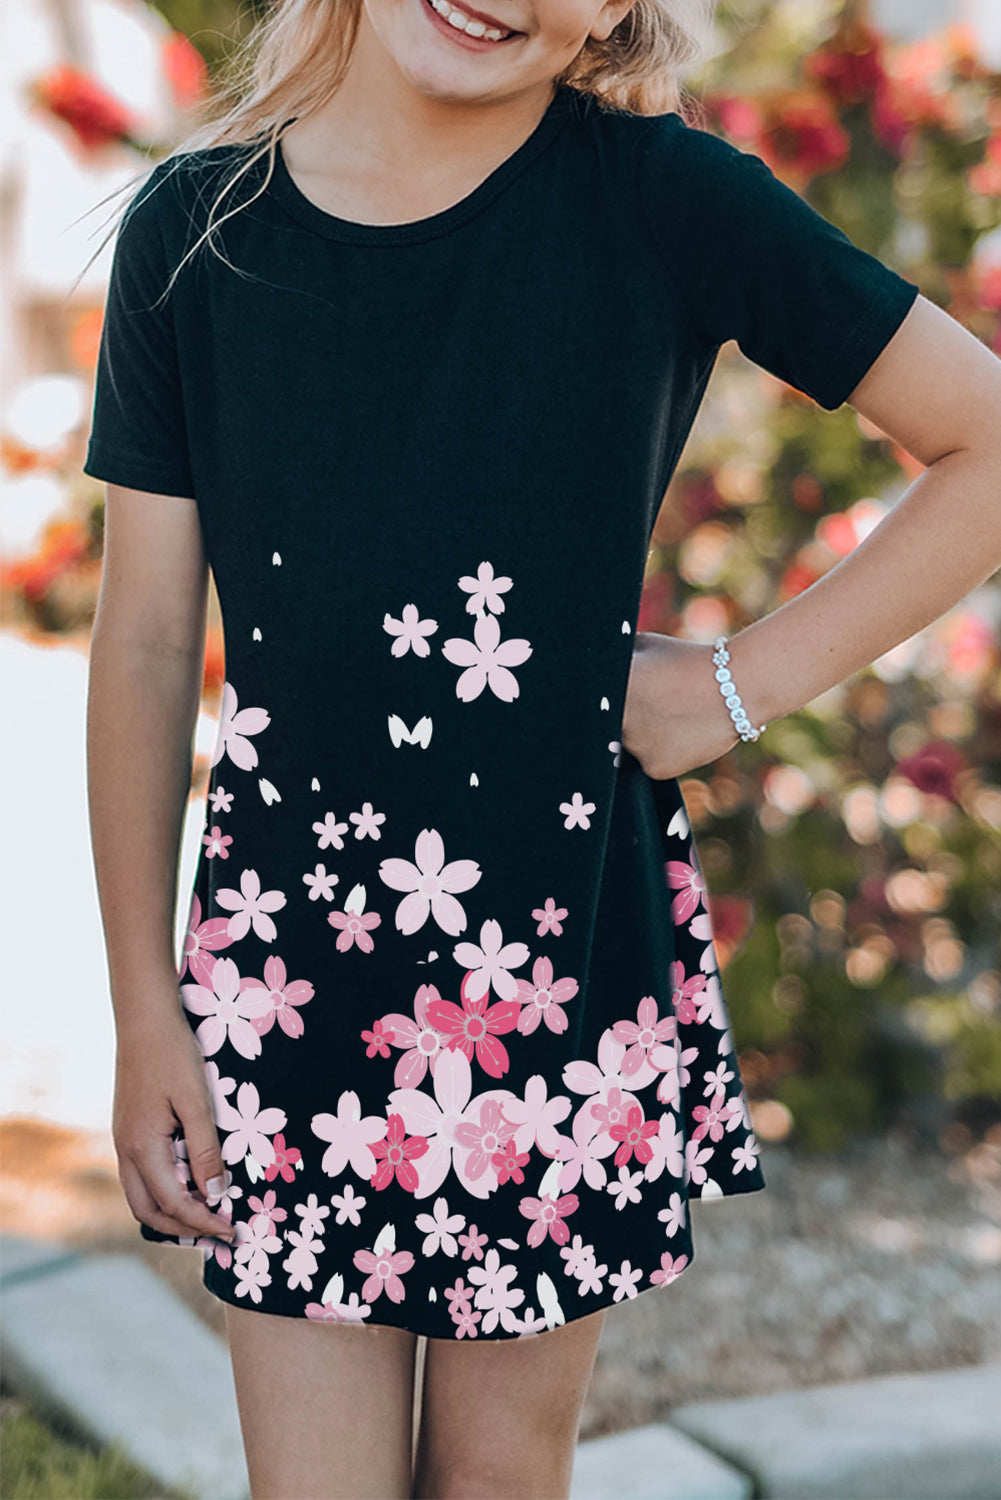 Black Family Matching Girl's Cherry Blossoms Print T Shirt Mini Dress Black 60%Polyester+35%Viscose+5%Elastane Family Dress JT's Designer Fashion